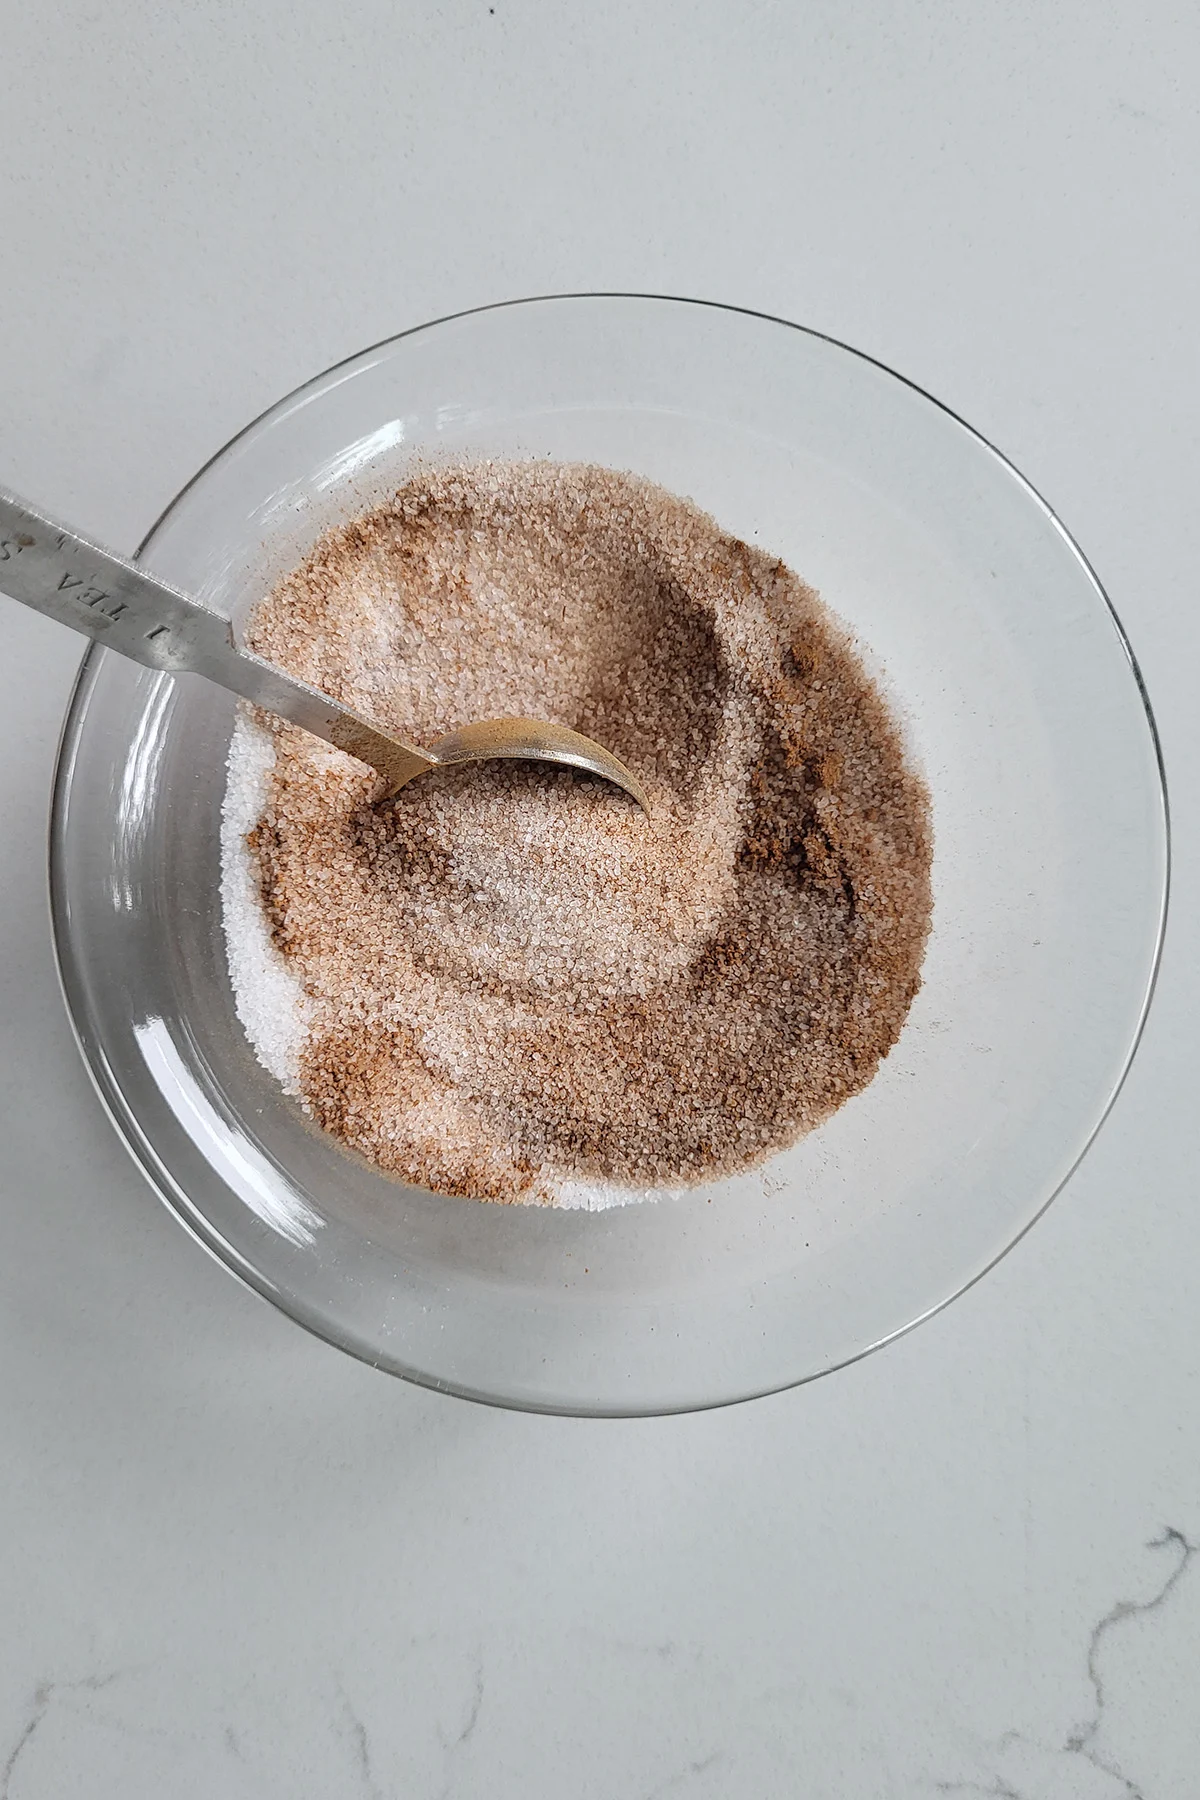 cinnamon sugar in a glass bowl.